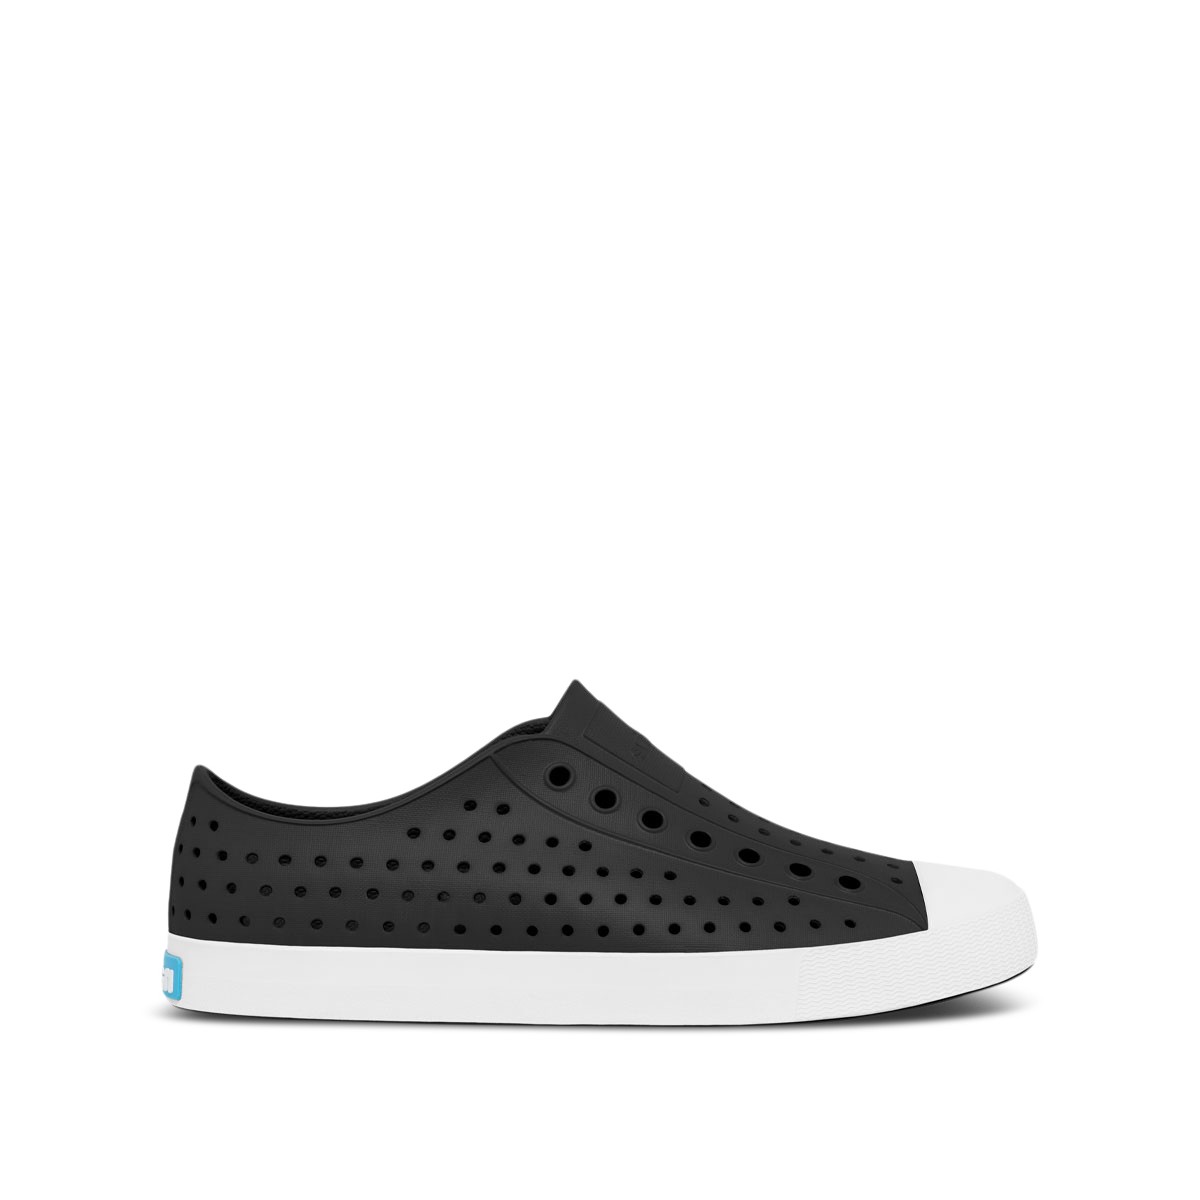 Jefferson Slip-On Shoes in Black/White